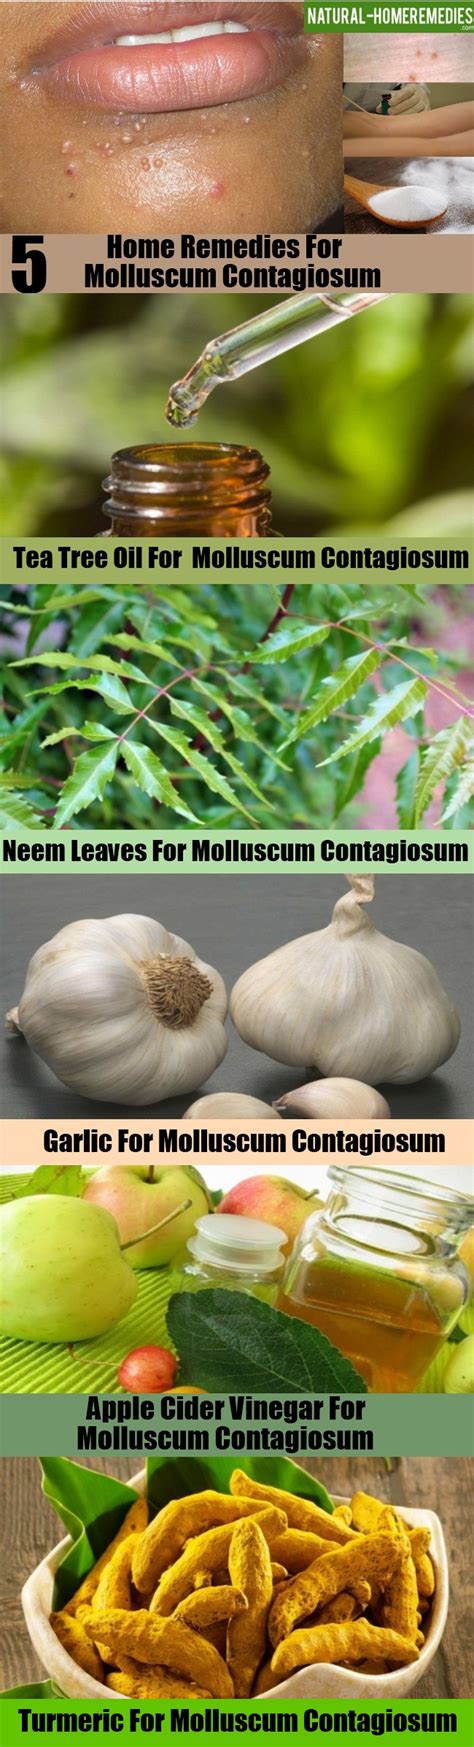 Top 5 Home Remedies For Molluscum Contagiosum Natural Home Remedies